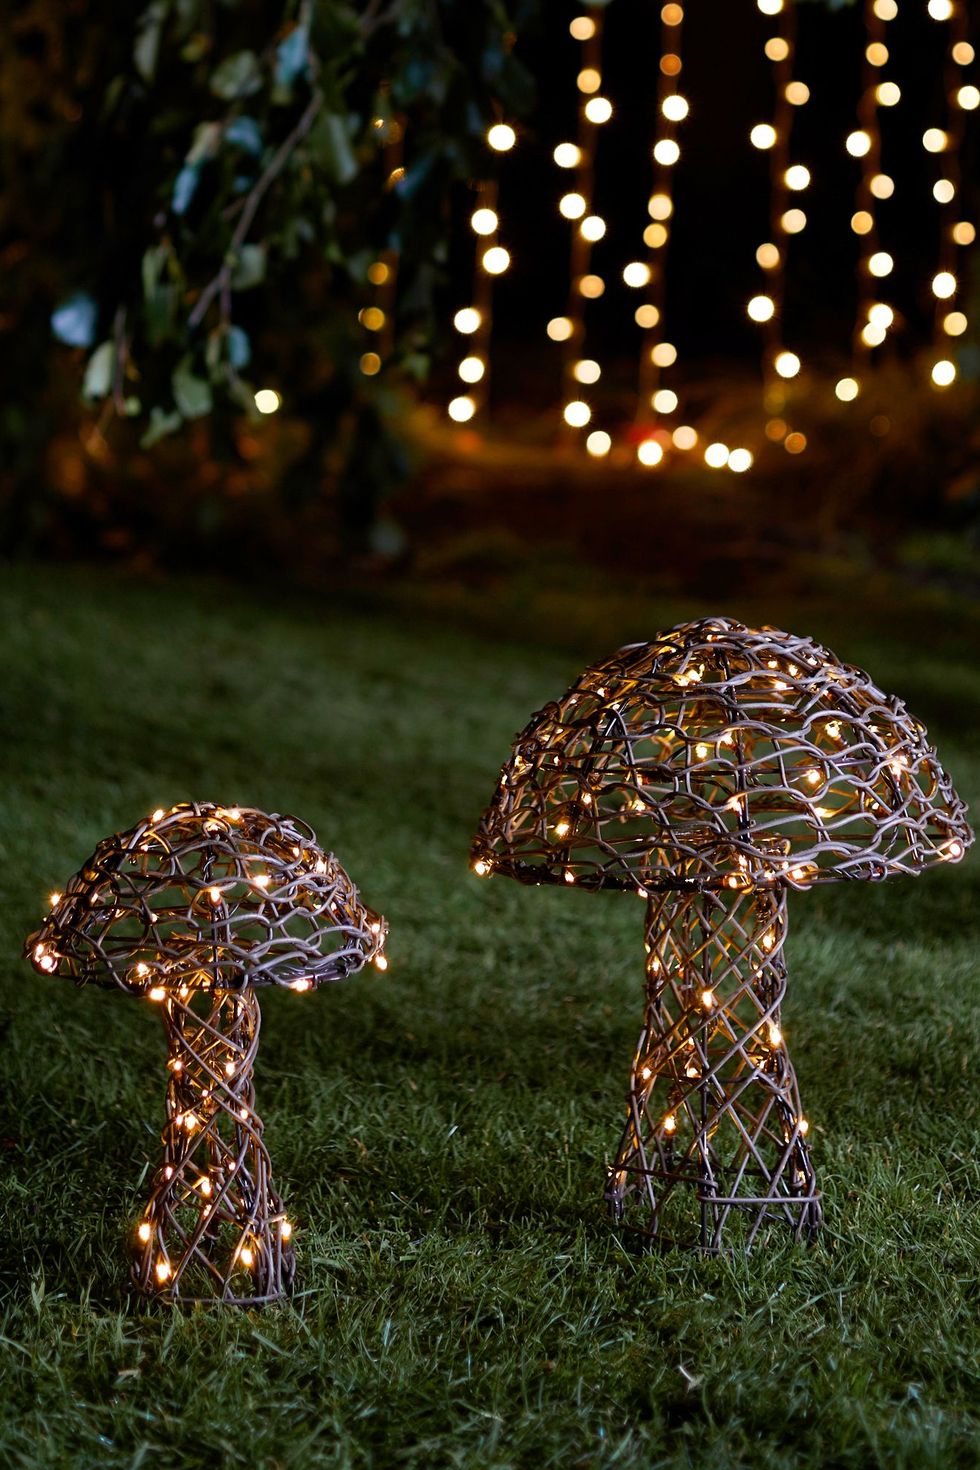 goblincore aesthetic, set of 2 rattan mushroom garden decoration figures, lights4fun